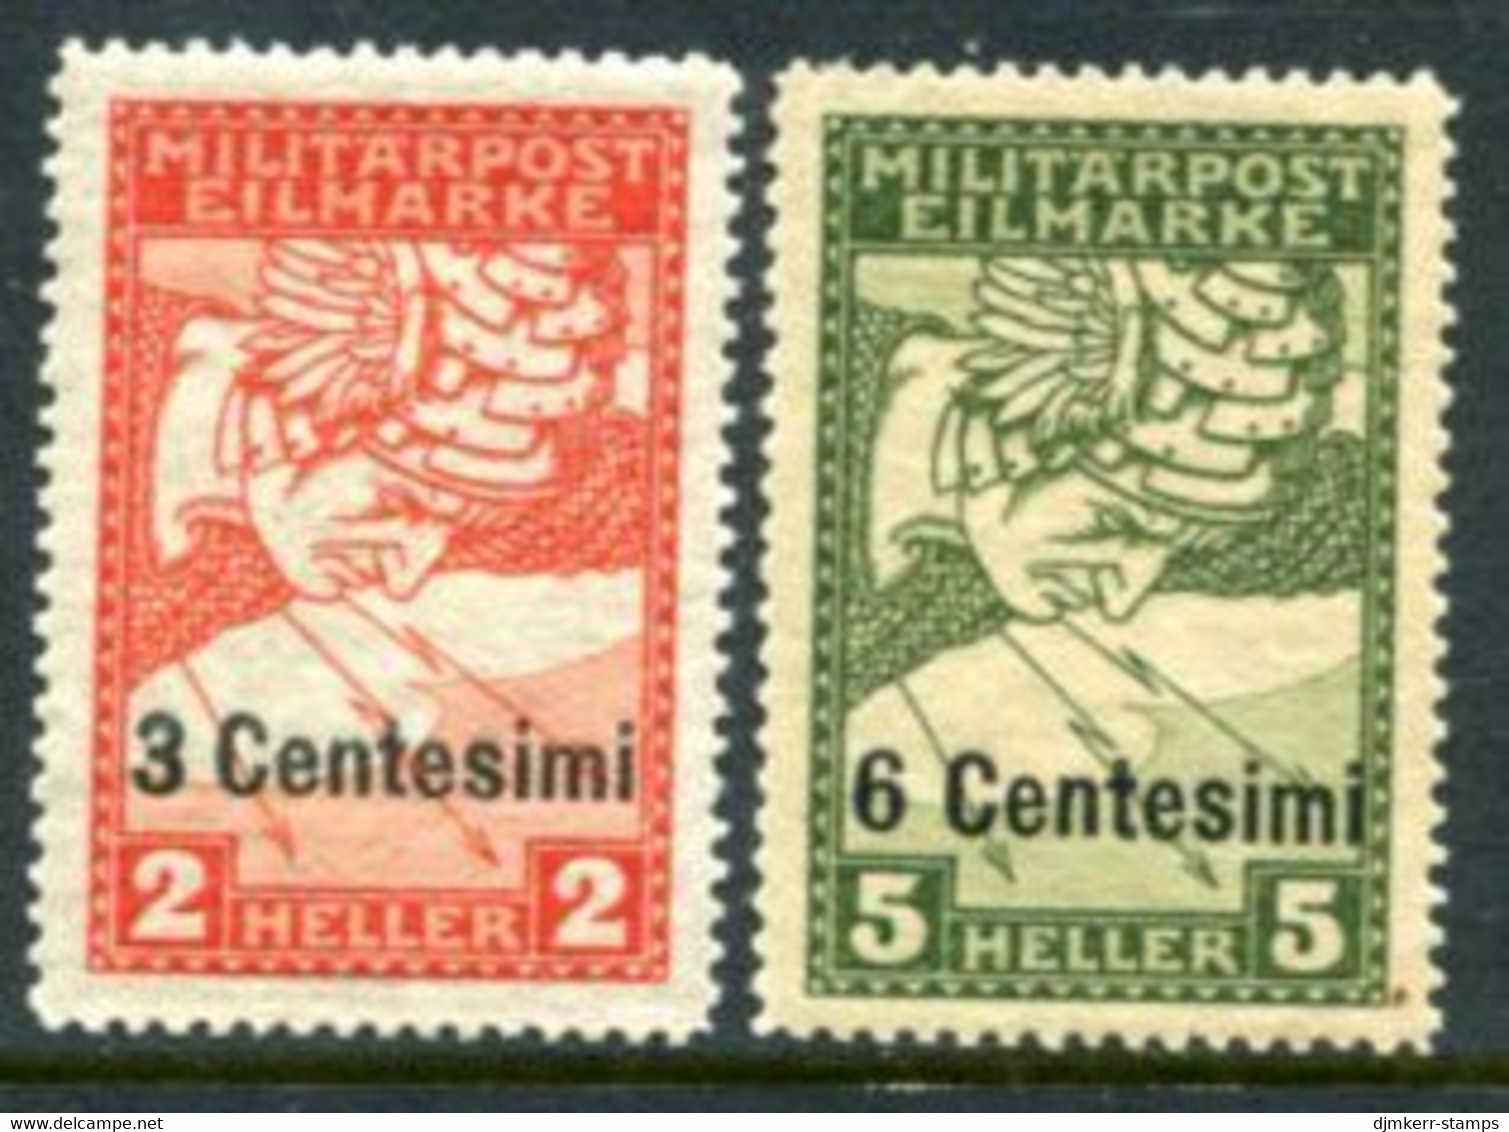 AUSTRIAN FELDPOST In ITALY 1917 Overprint On Newspaper Express Stamps. LHM / *.  Michel 24-25 - Ungebraucht